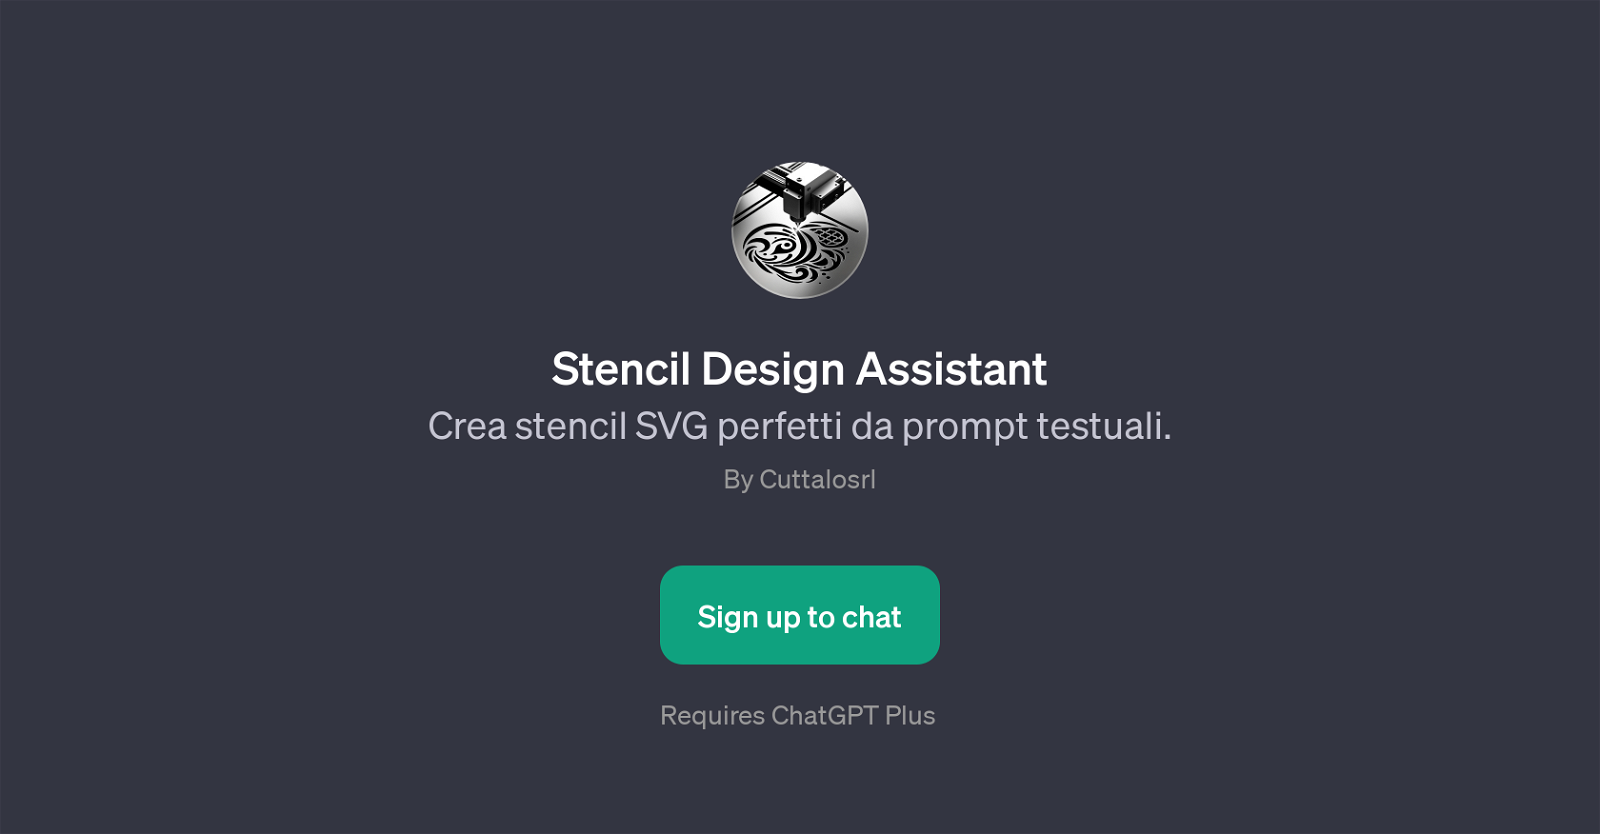 Stencil Design Assistant website